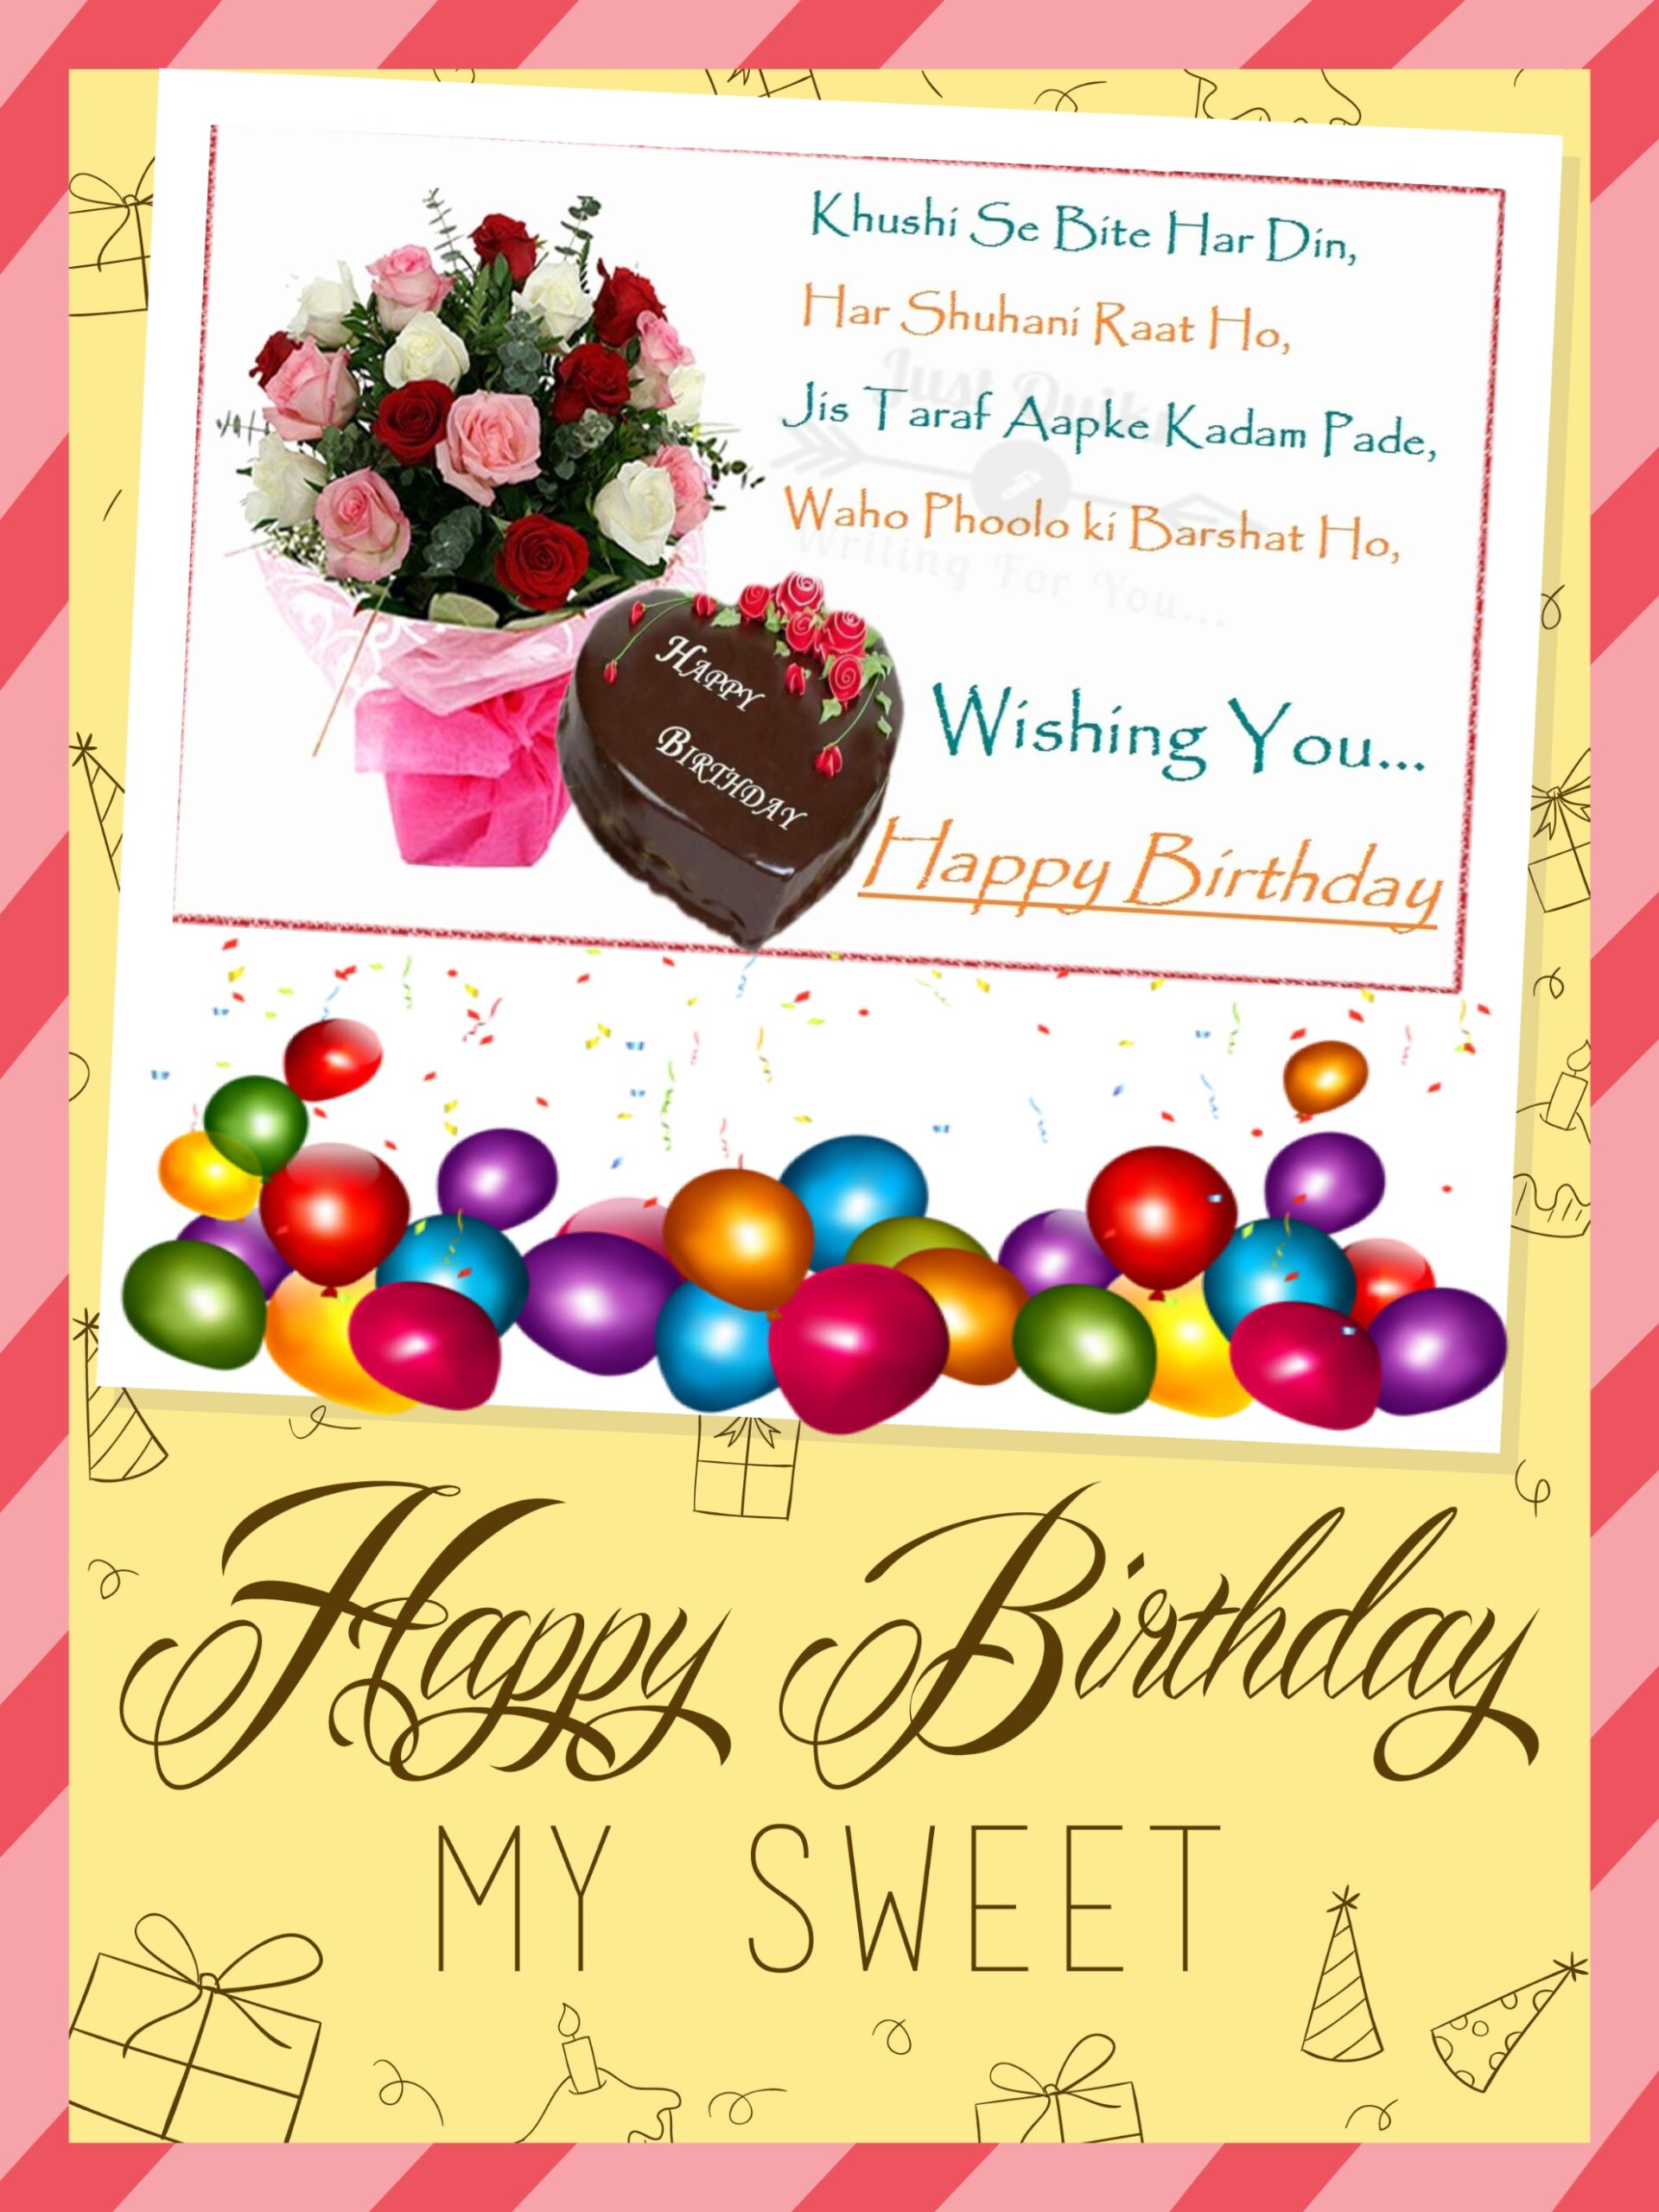 Happy Birthday Cake HD Pics Images with Shayari Sayings for Dadi